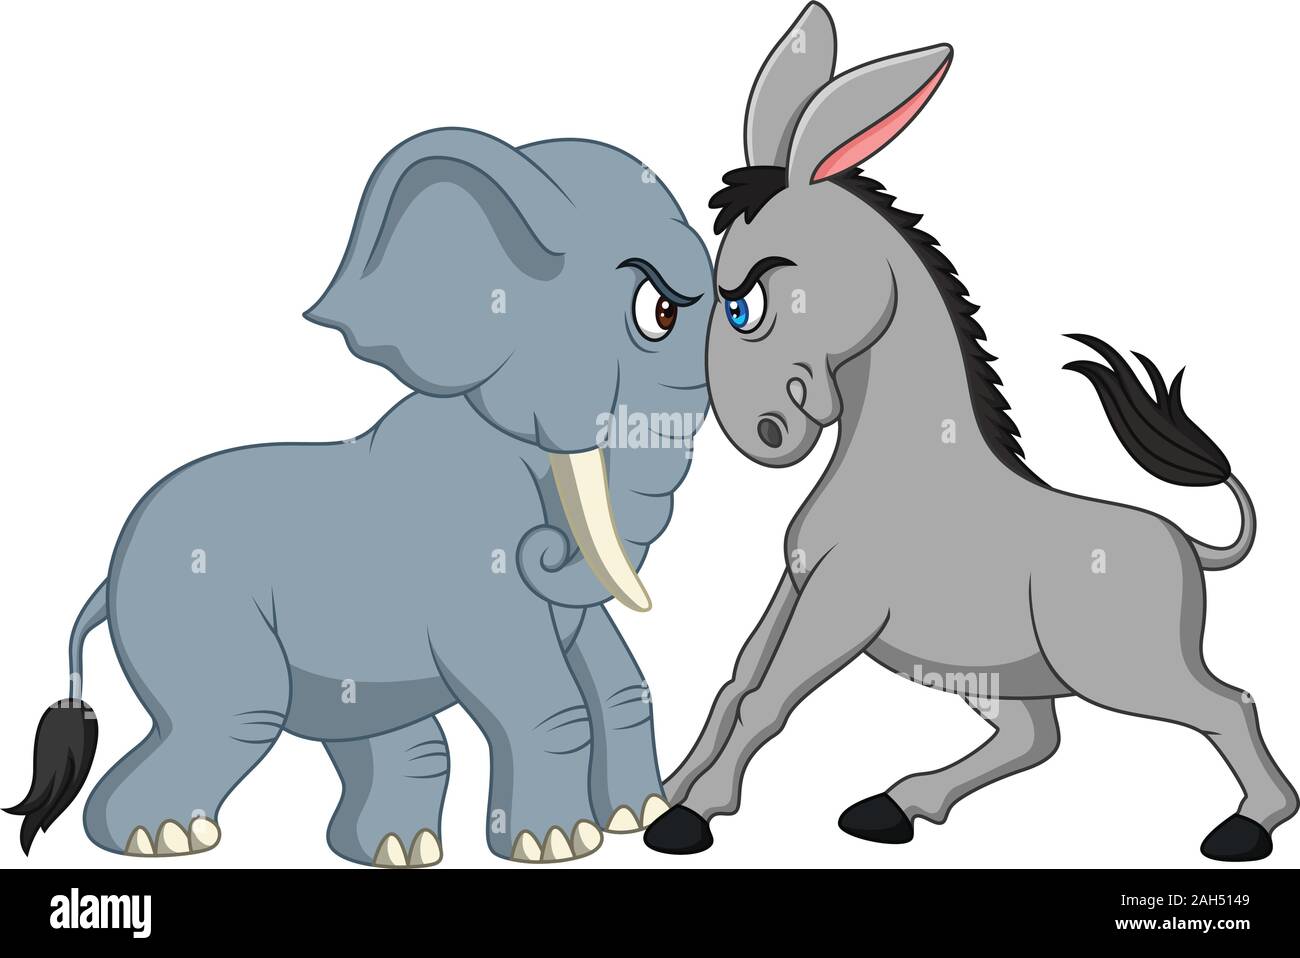 American politics - Democratic donkey versus Republican elephant Stock Vector